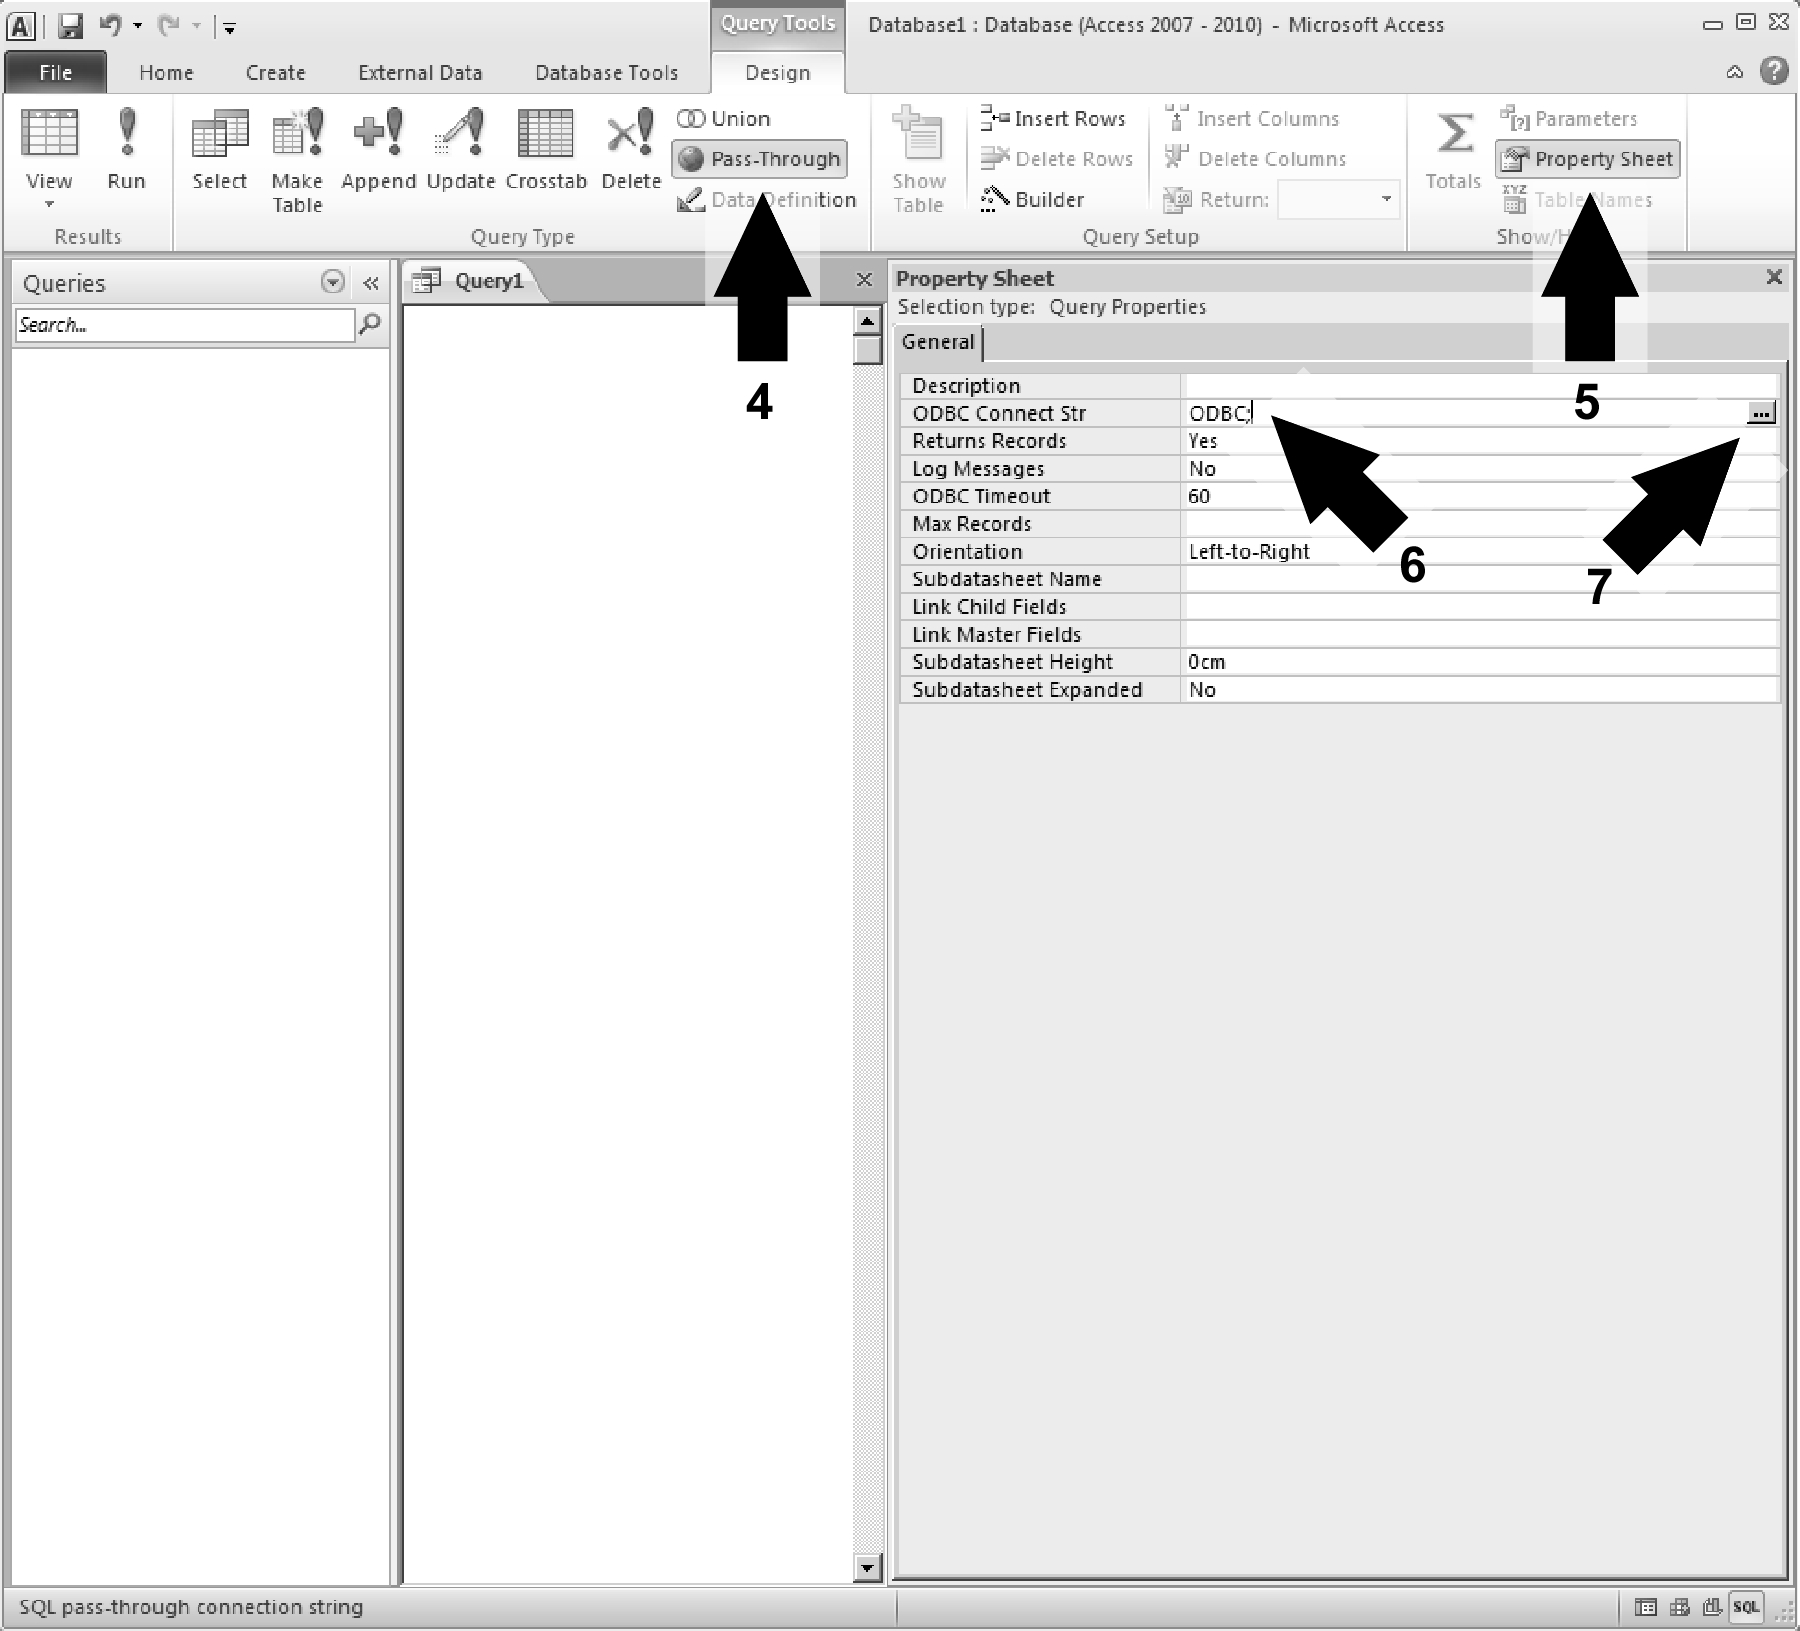 Figure 3.1.2.9 Microsoft Access Version 2007 property sheet,
build